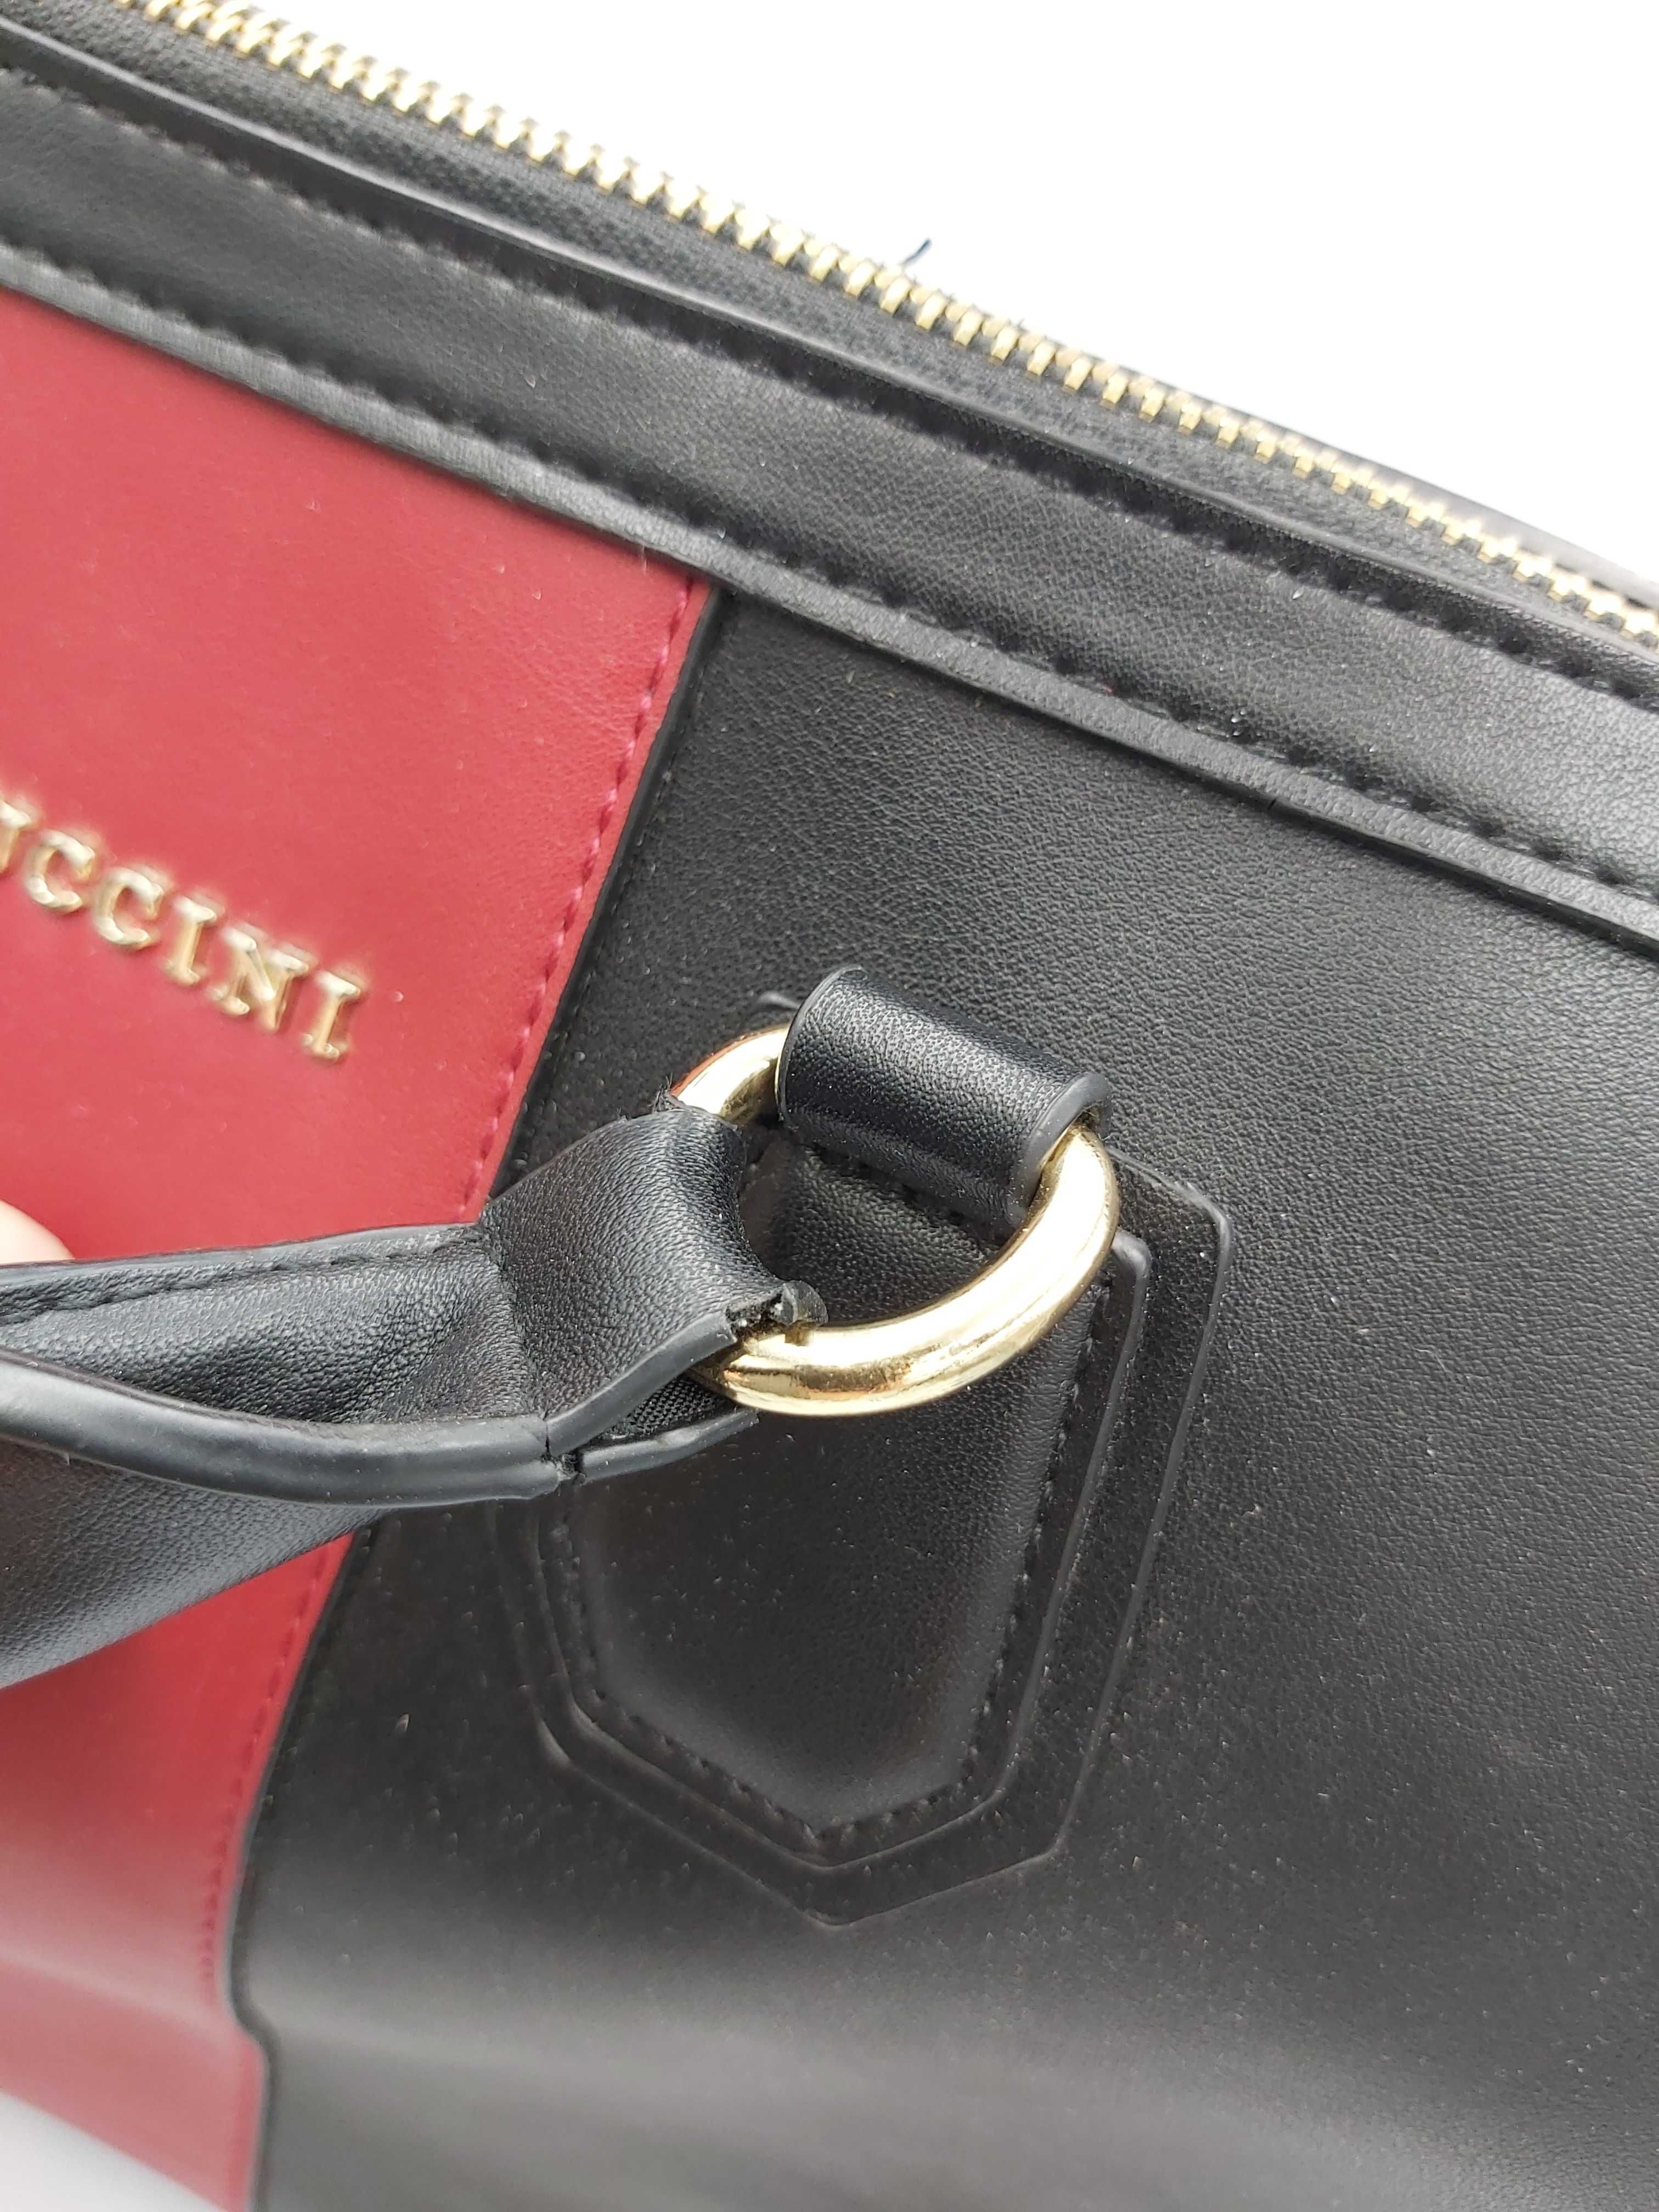 Torebka Puccini biurowa laptopa duża kuferek torba czarna czerwona